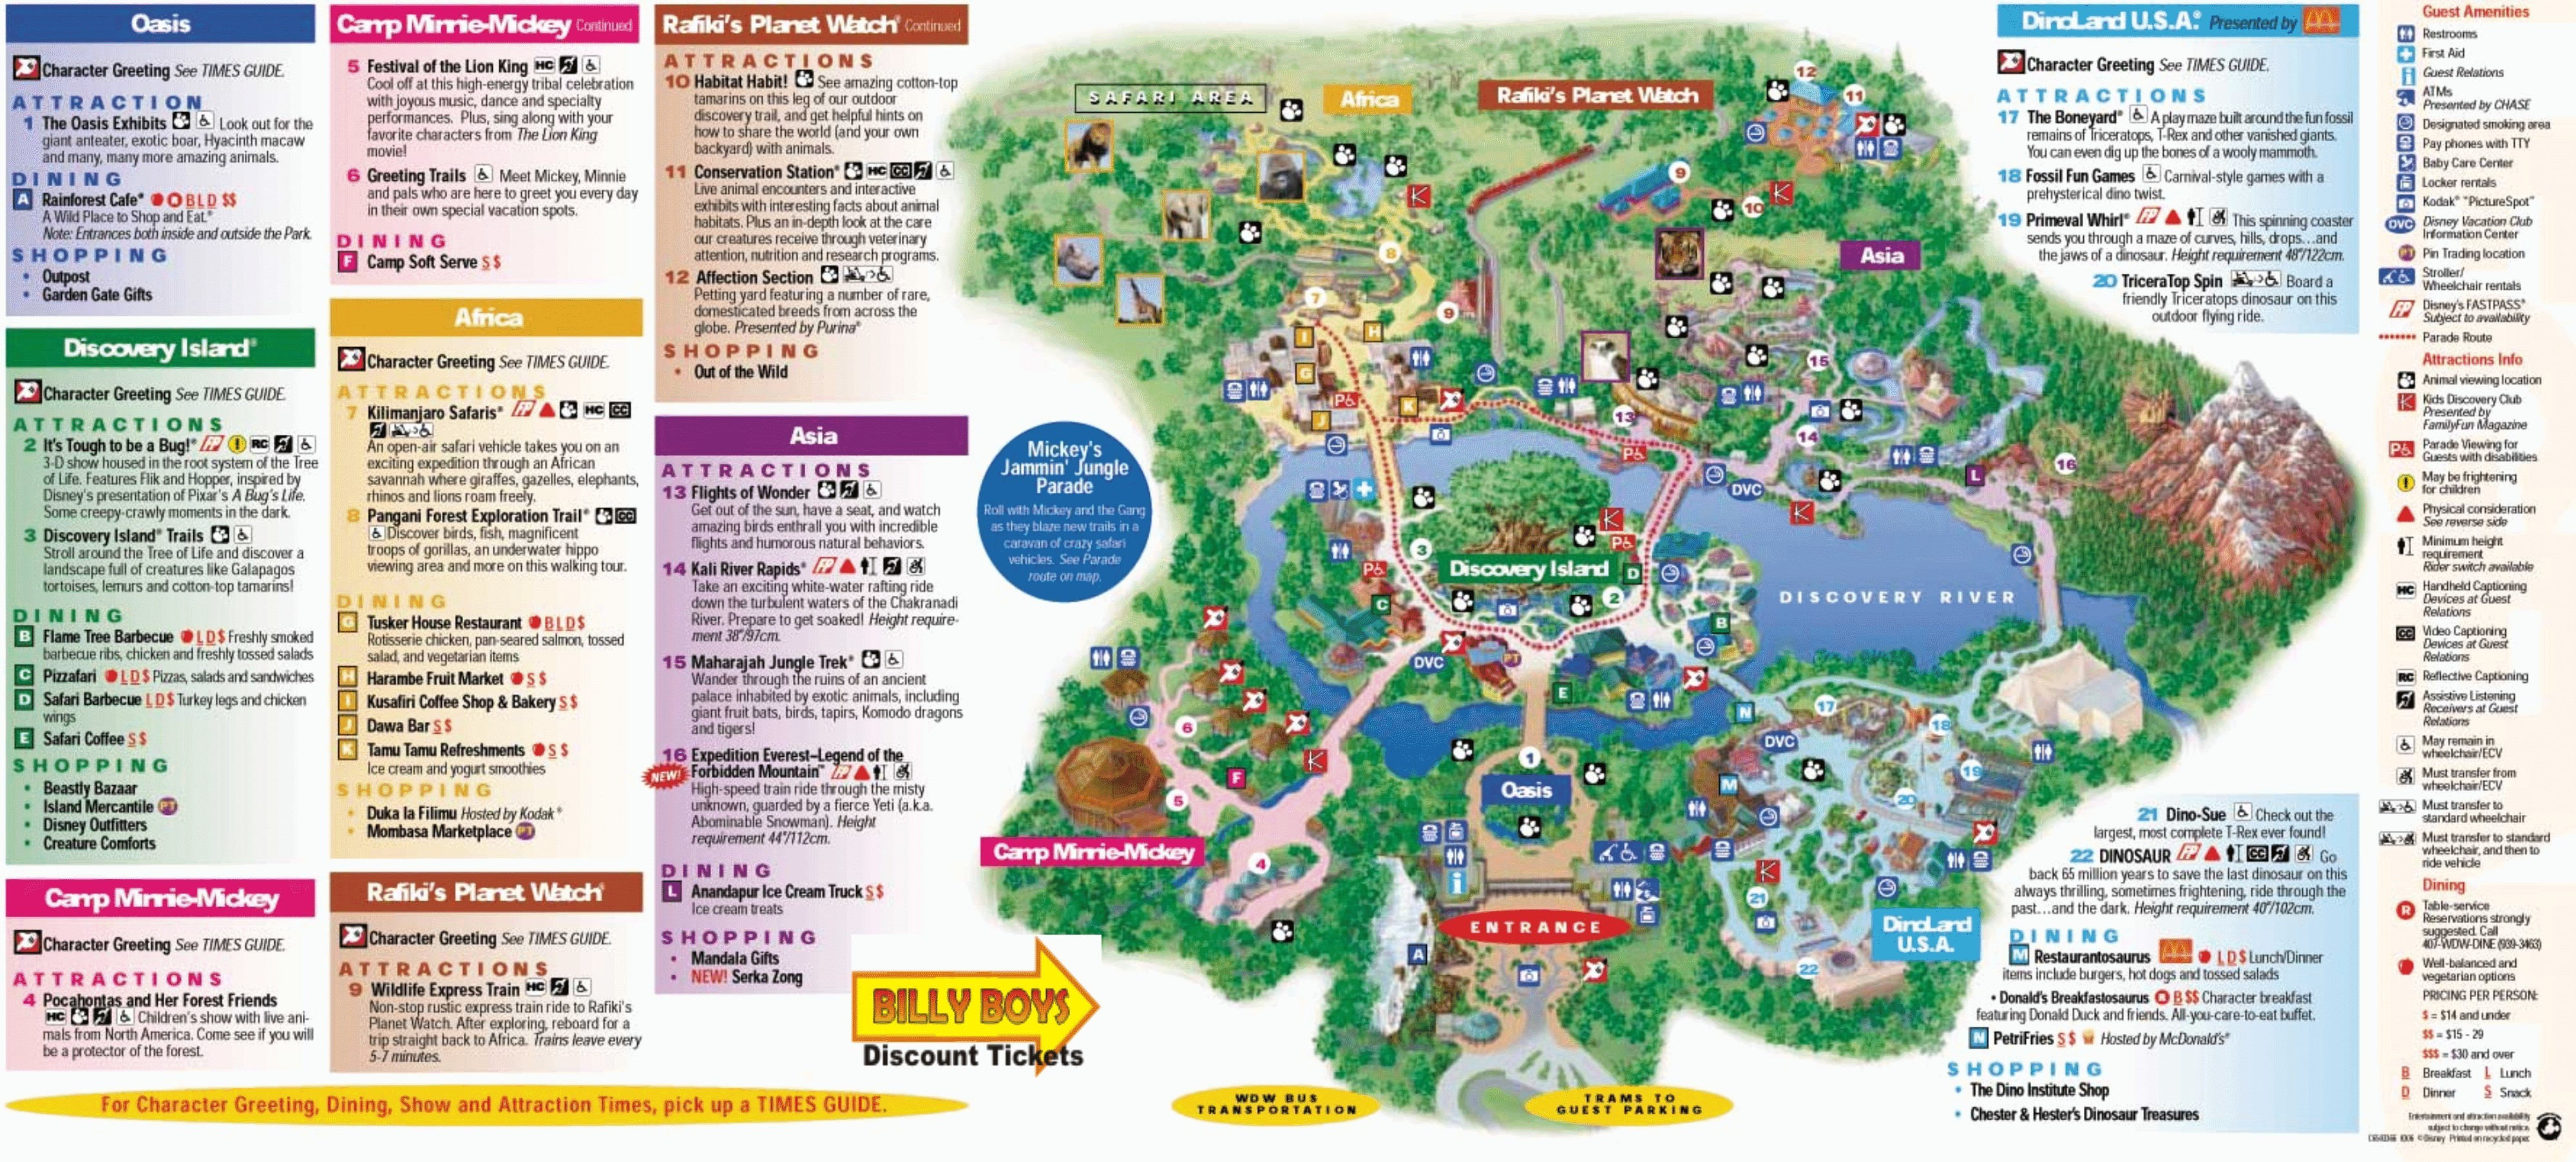 Printable Map Disney Hollywood Studios Fresh Google Map Disney World Orlando Copy Magic Kingdom Park Walt In Maps